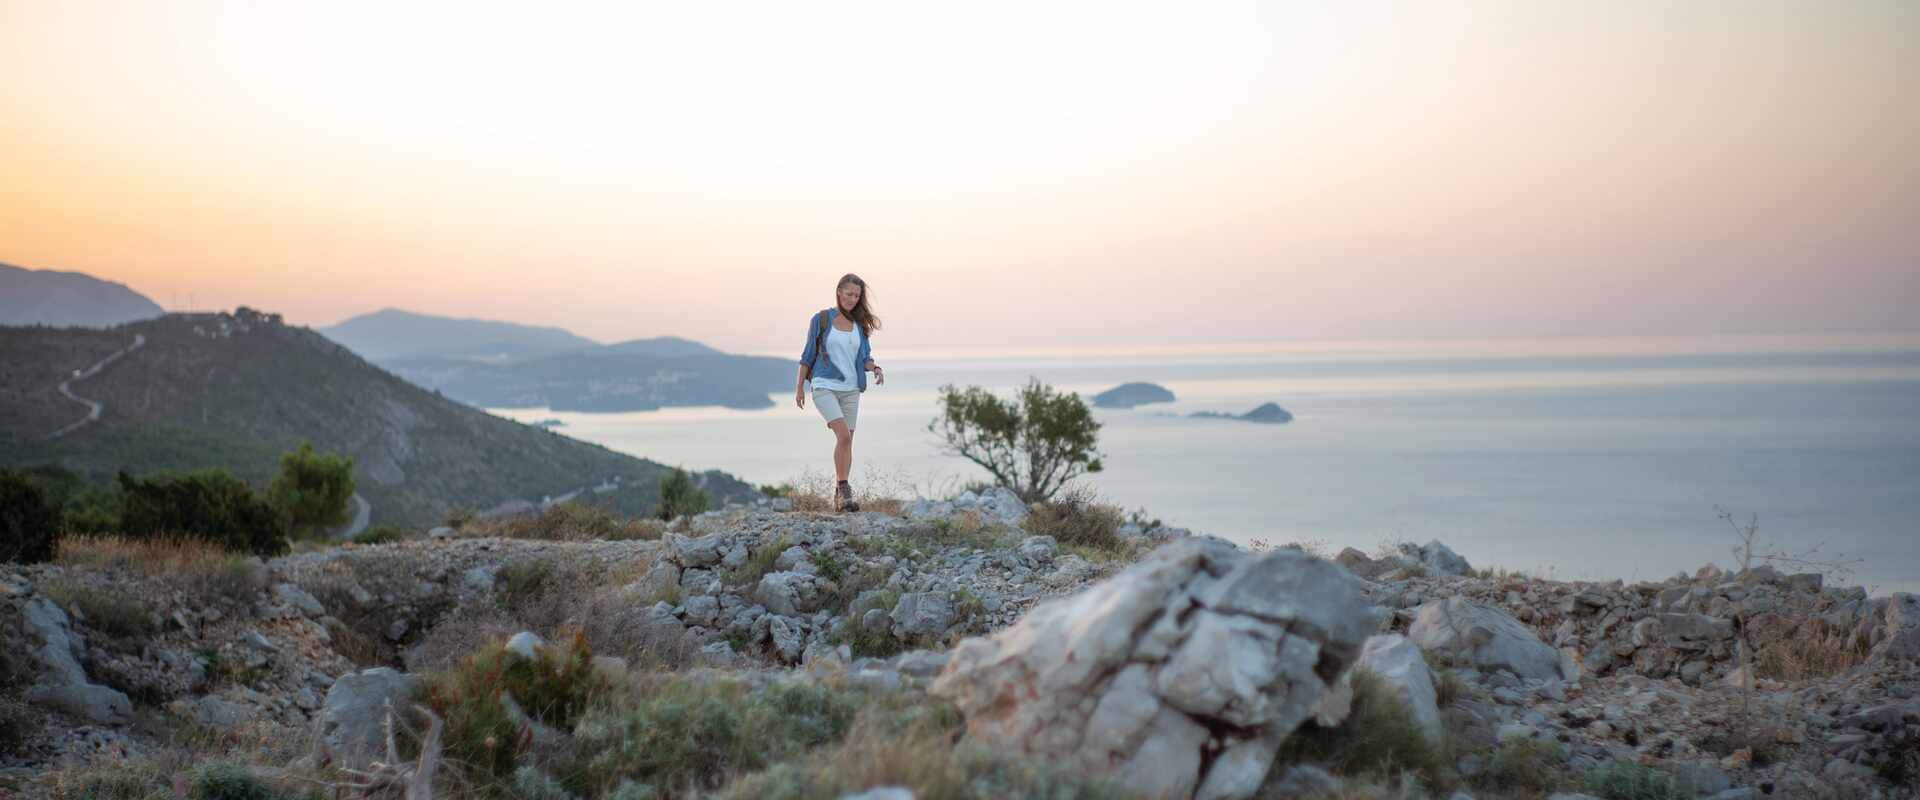 Female walking along deserted rocks area, Croatia